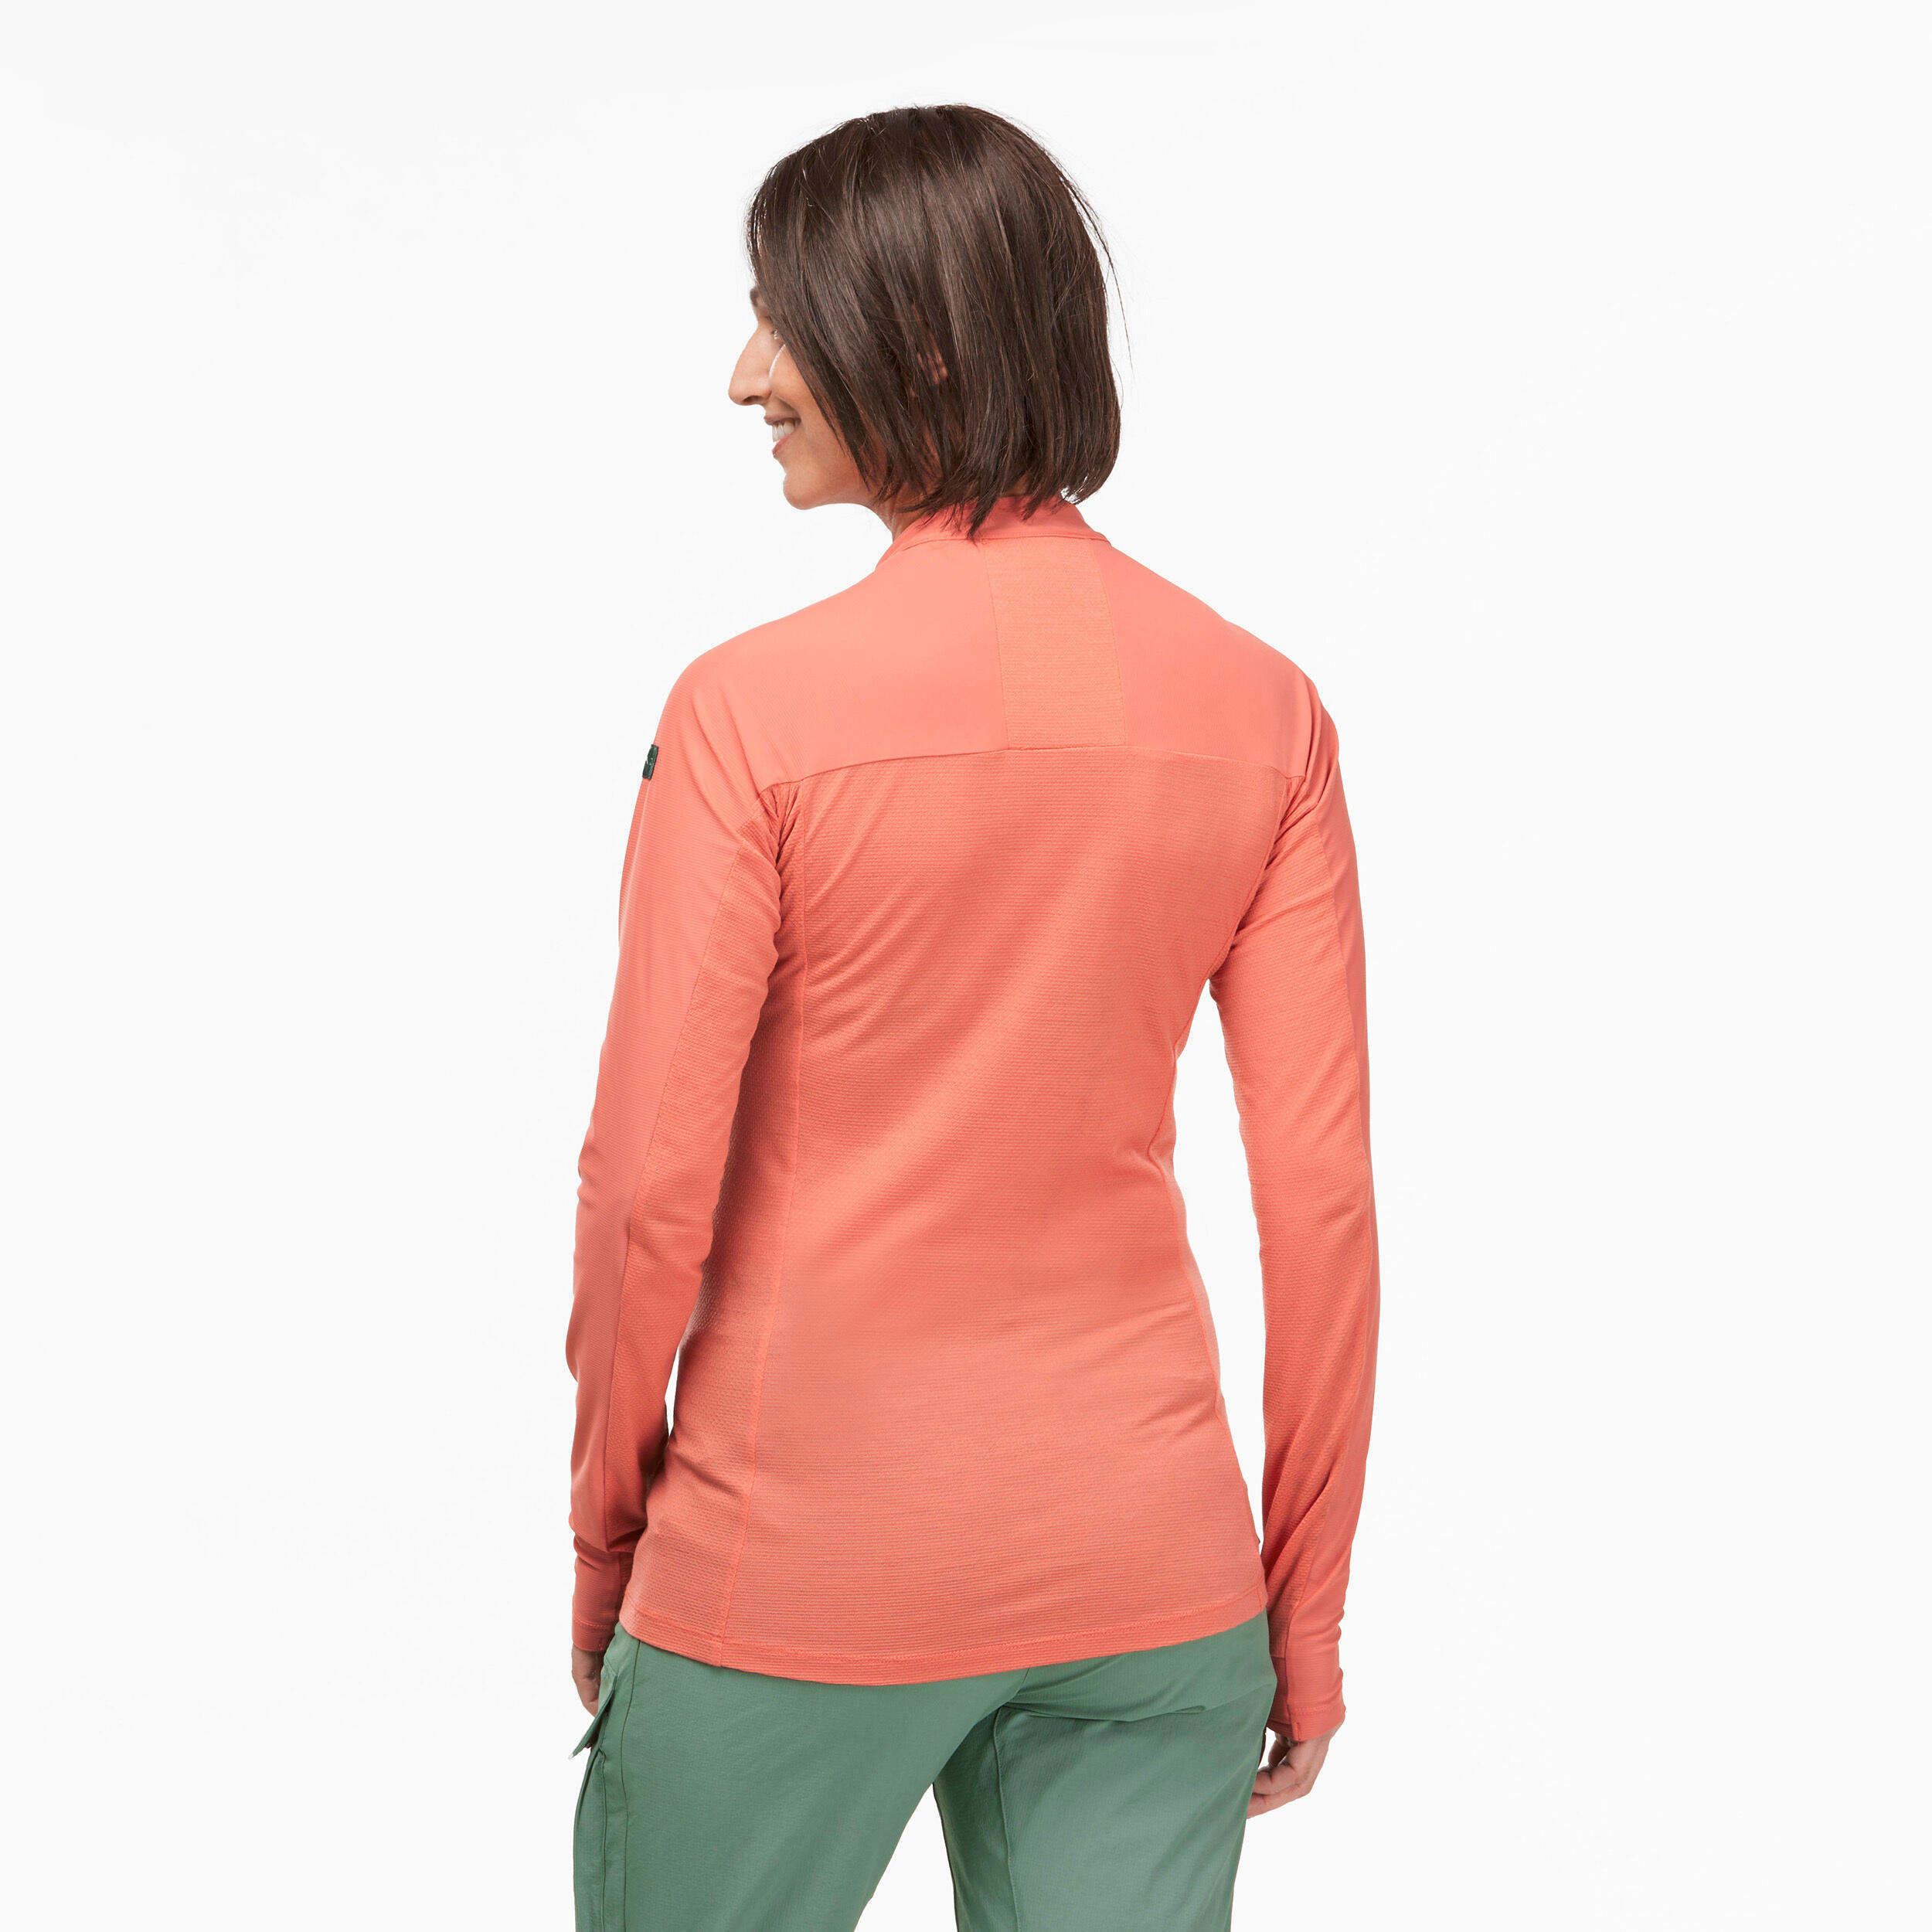 Women’s long-sleeved t-shirt  Tropic 900 coral 5/10